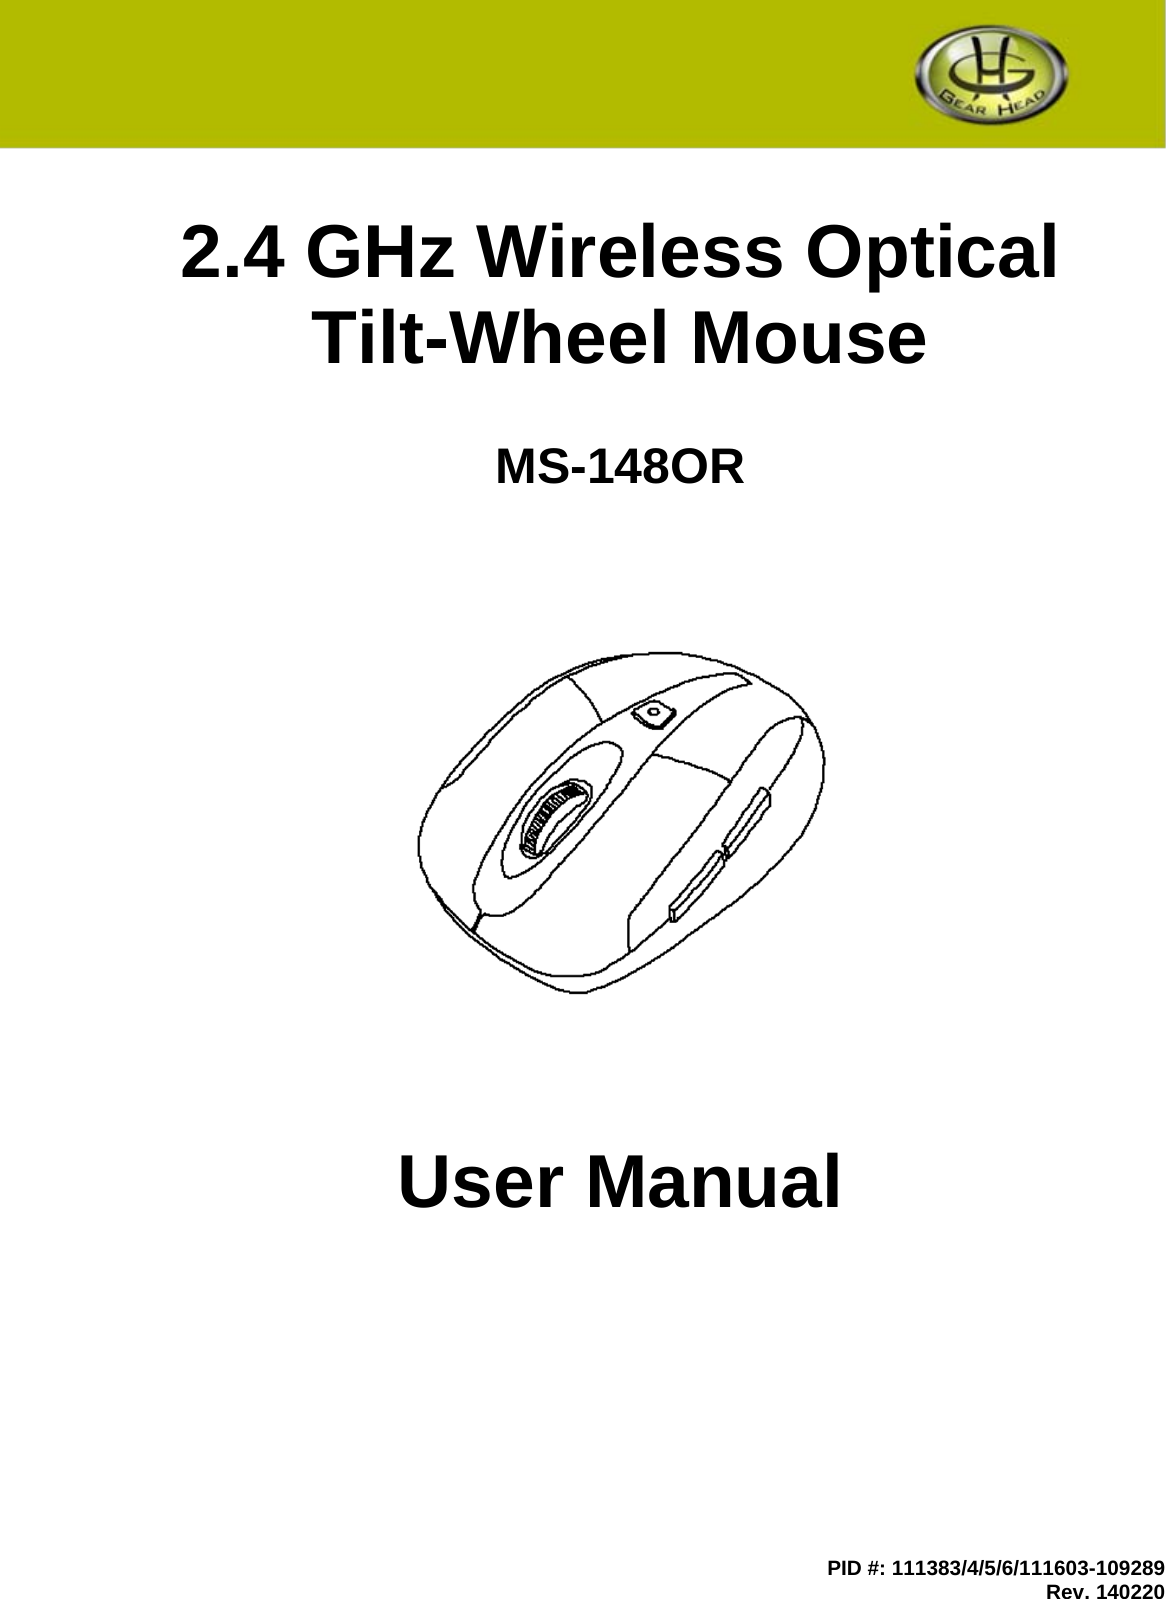 PID #: 111383/4/5/6/111603-109289 Rev. 140220    2.4 GHz Wireless Optical  Tilt-Wheel Mouse   MS-148OR               User Manual 